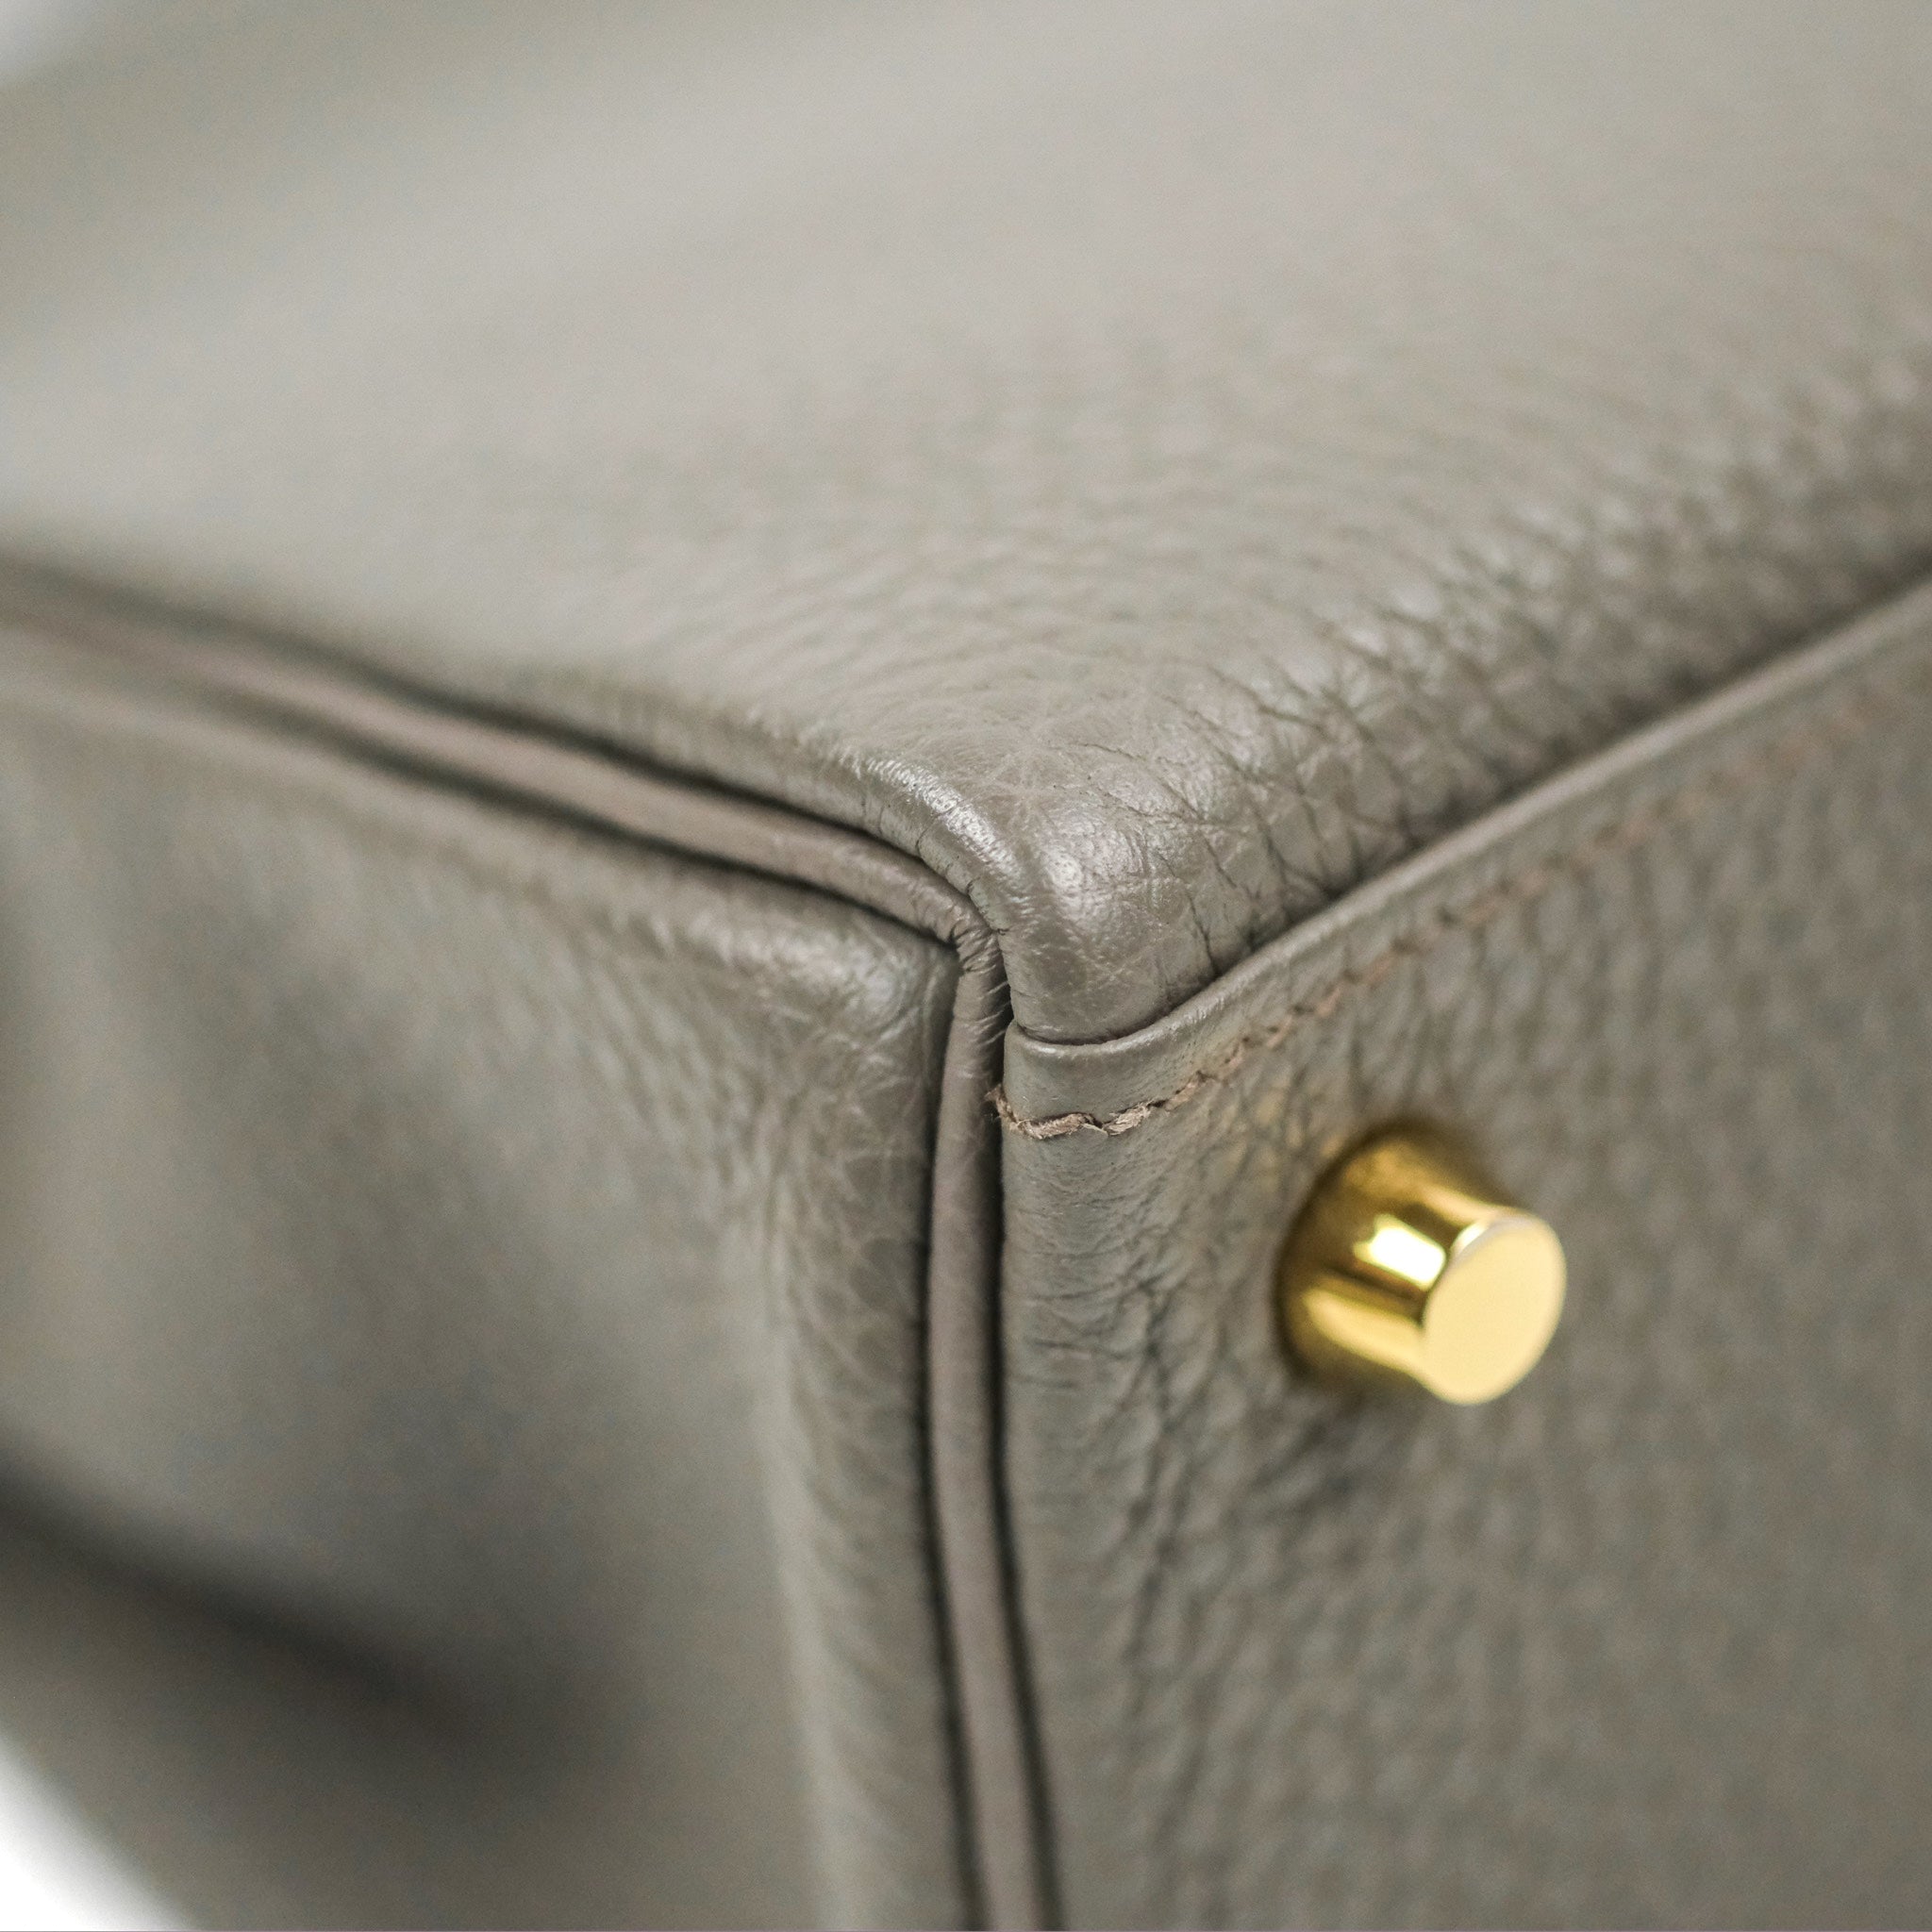 Hermès Retourne Kelly 25 Gris Etain Togo Gold Hardware – Coco Approved  Studio